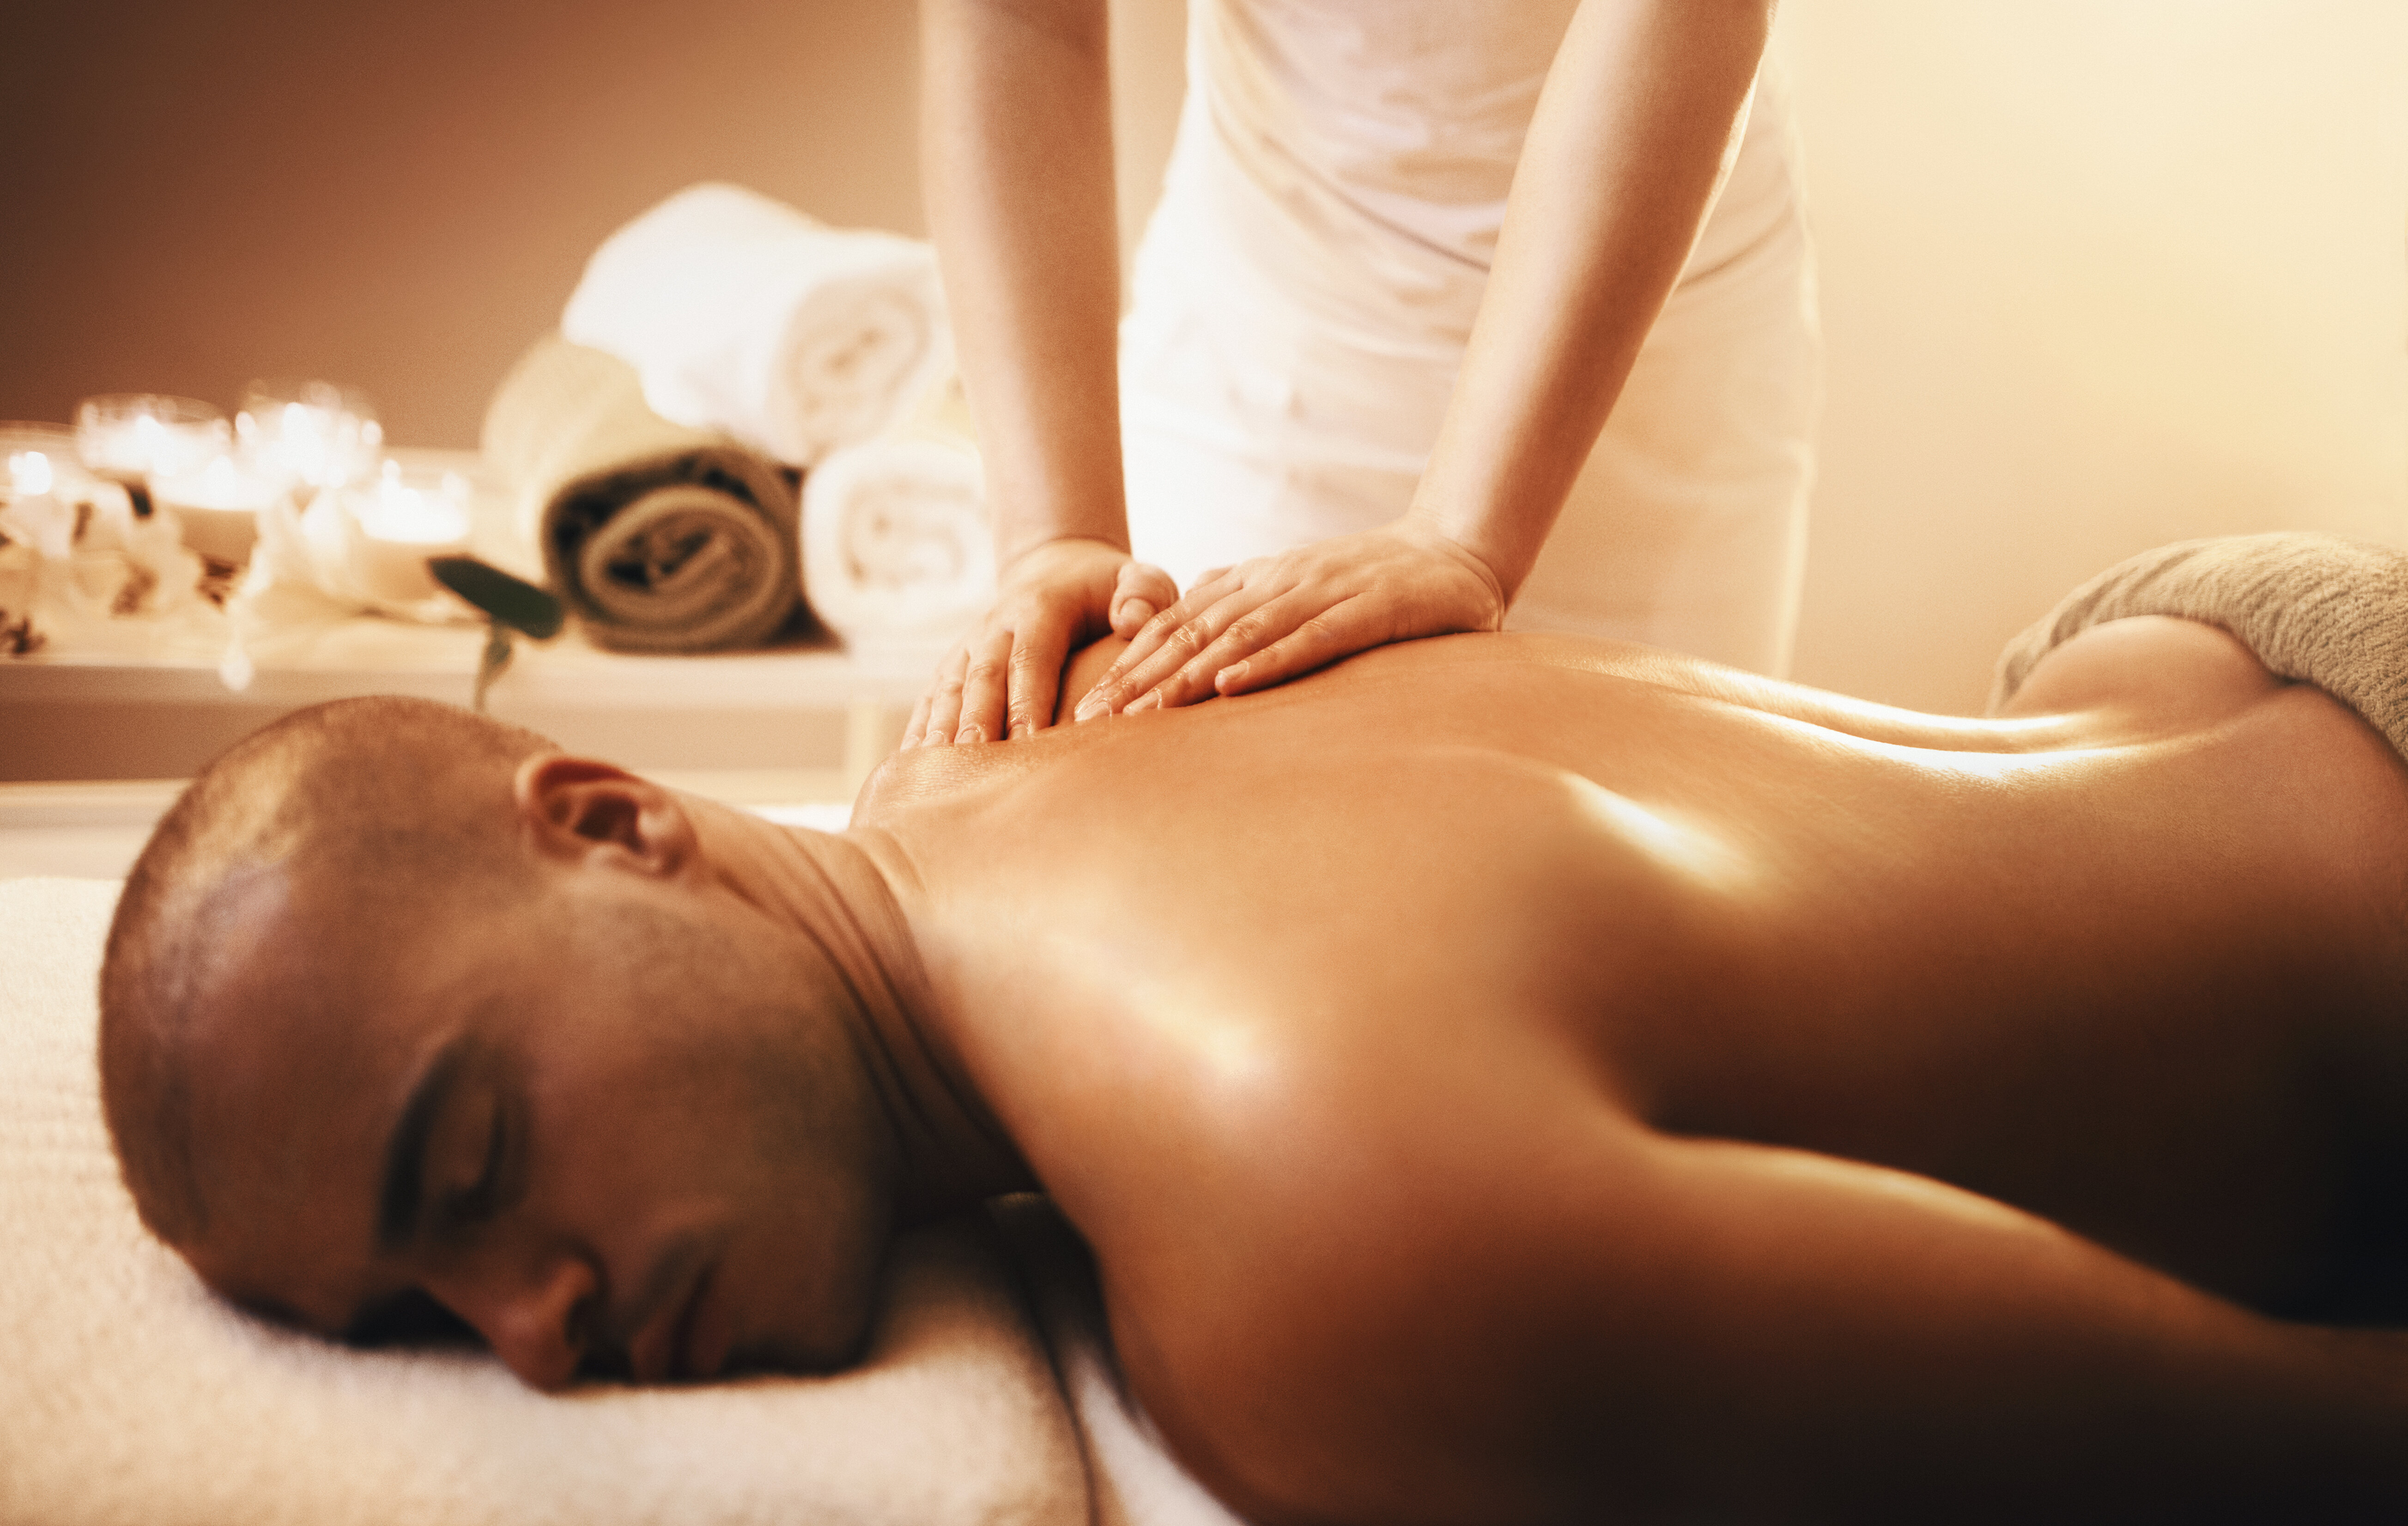 Massage oil girls. Массаж релаксирующий для мужчин. Спа массаж для мужчин. Релакс массаж для мужчин. Массаж картинки.